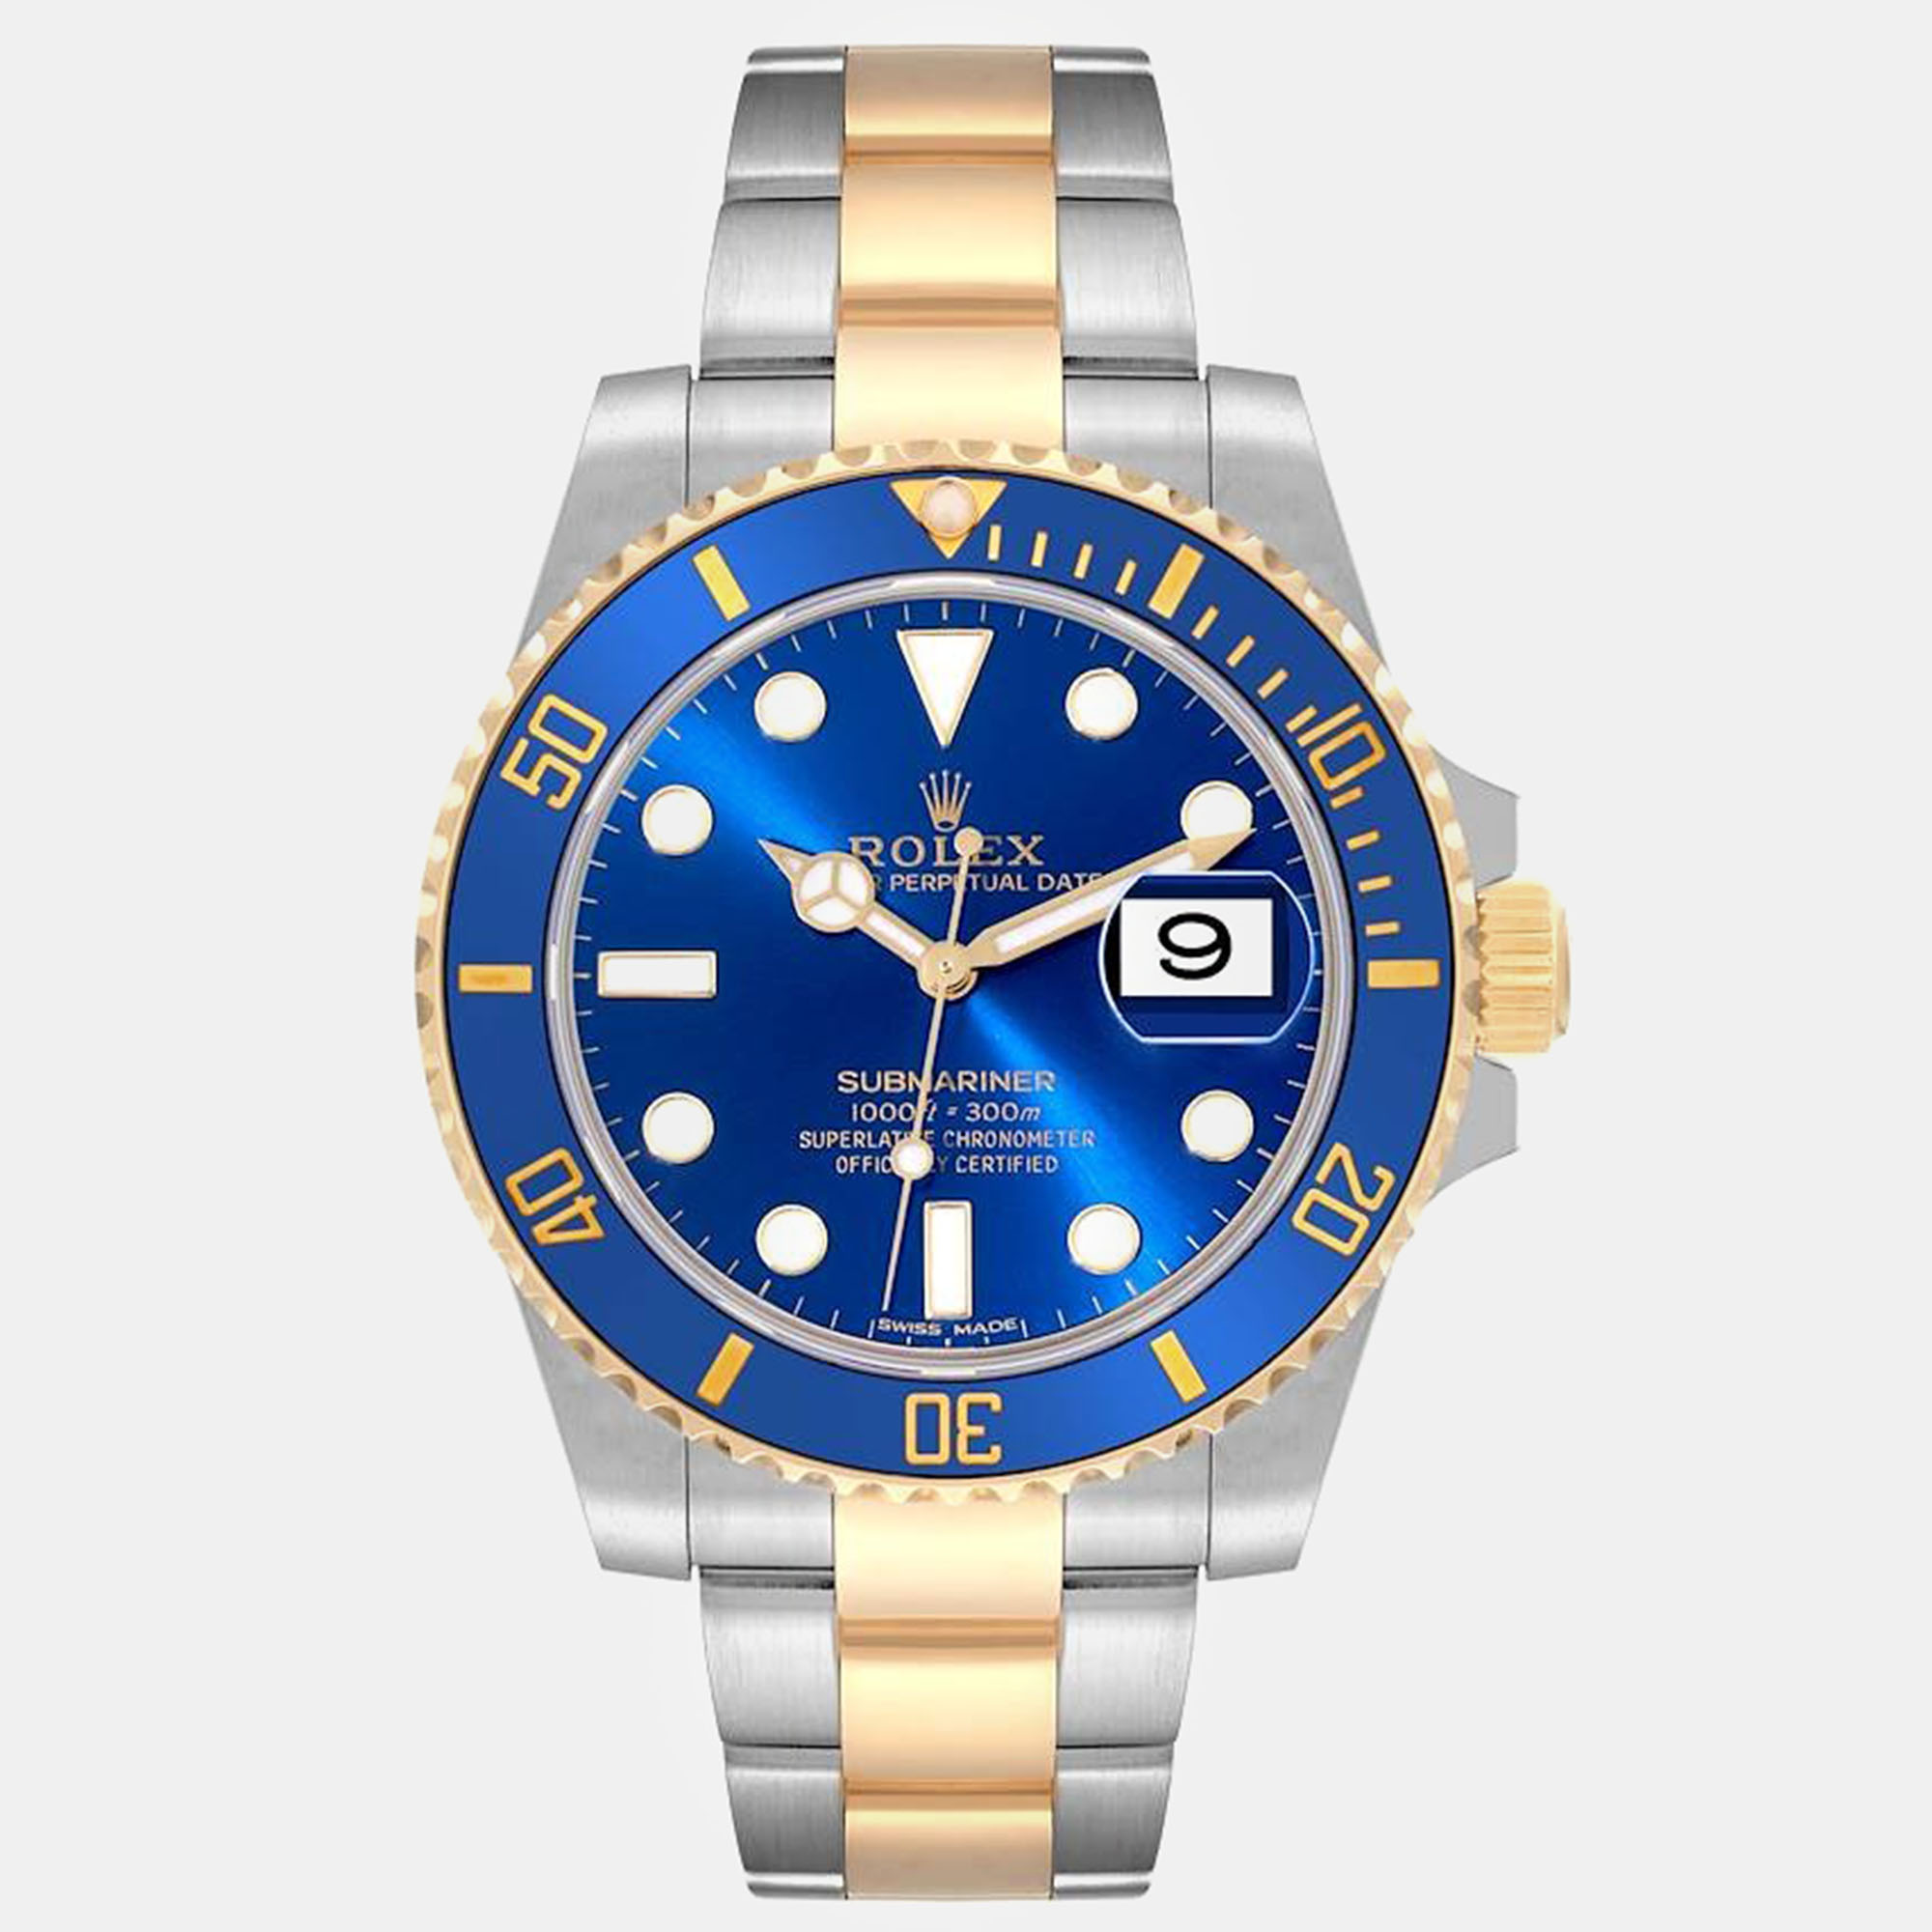 Rolex submariner steel yellow gold blue dial men's watch 116613 40 mm